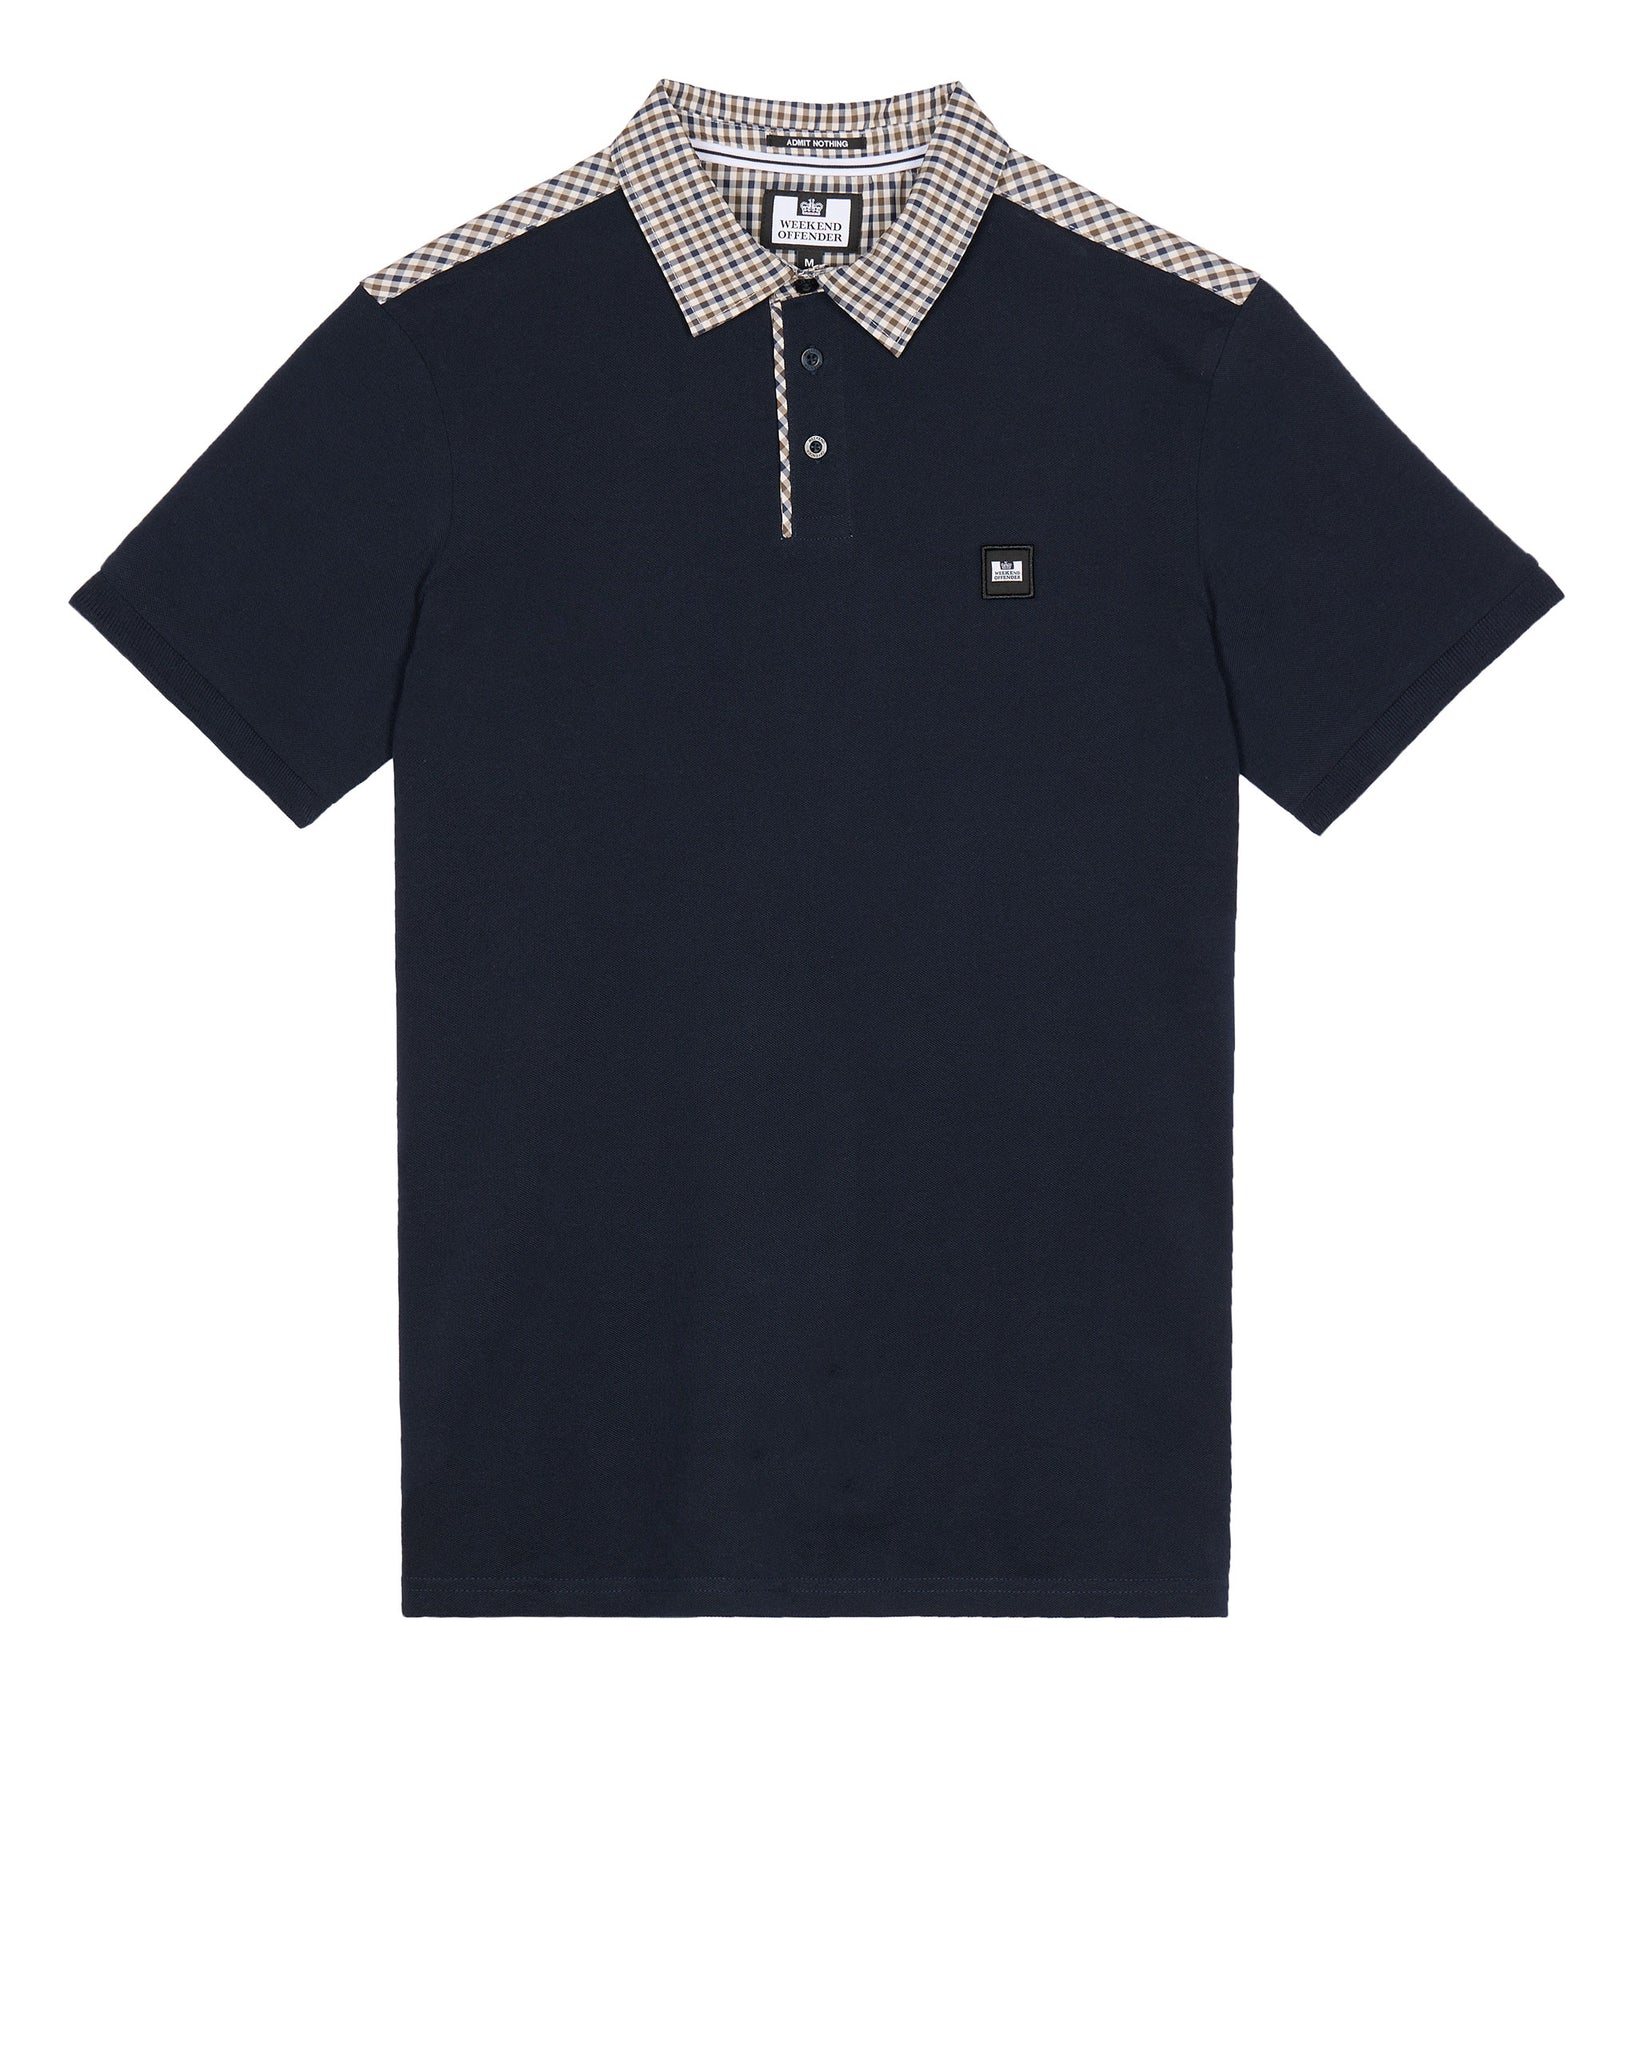 Costa Polo Shirt Navy/House Check - Plus Size